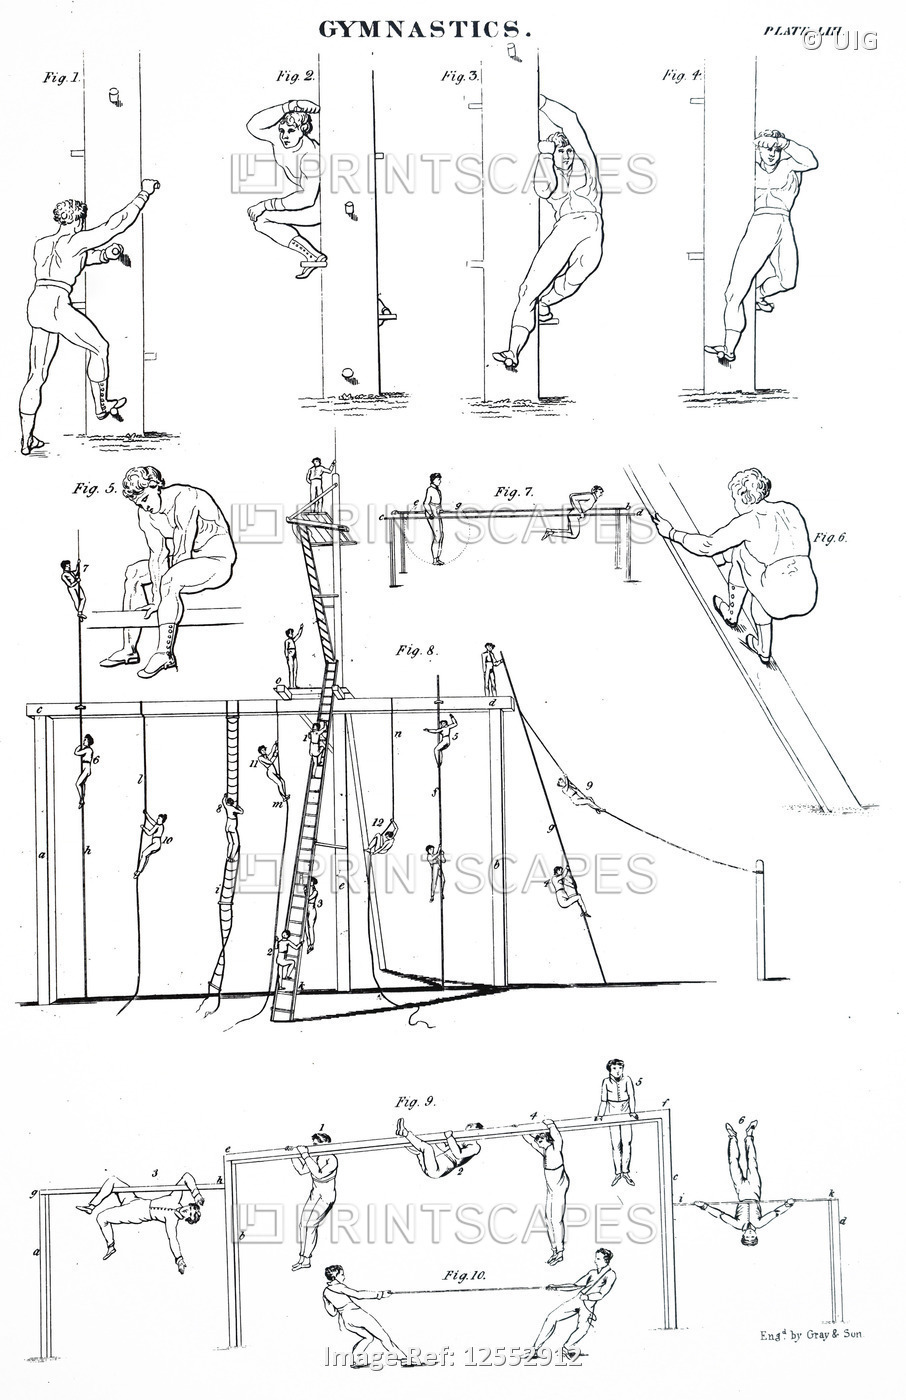 Illustration depicting boys doing gymnastics, 19th century